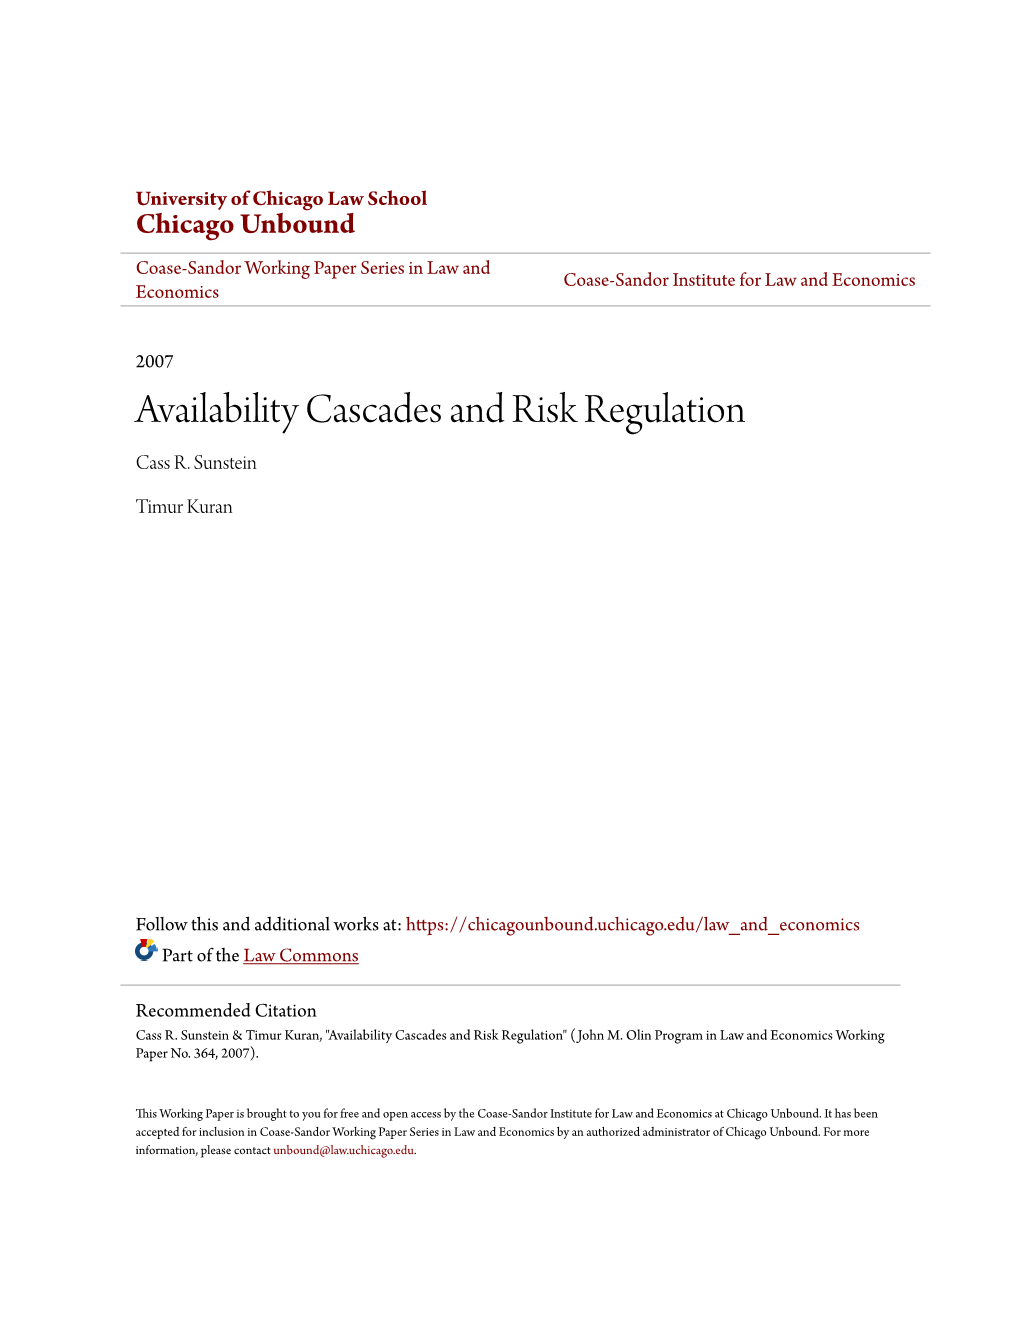 Availability Cascades and Risk Regulation Cass R